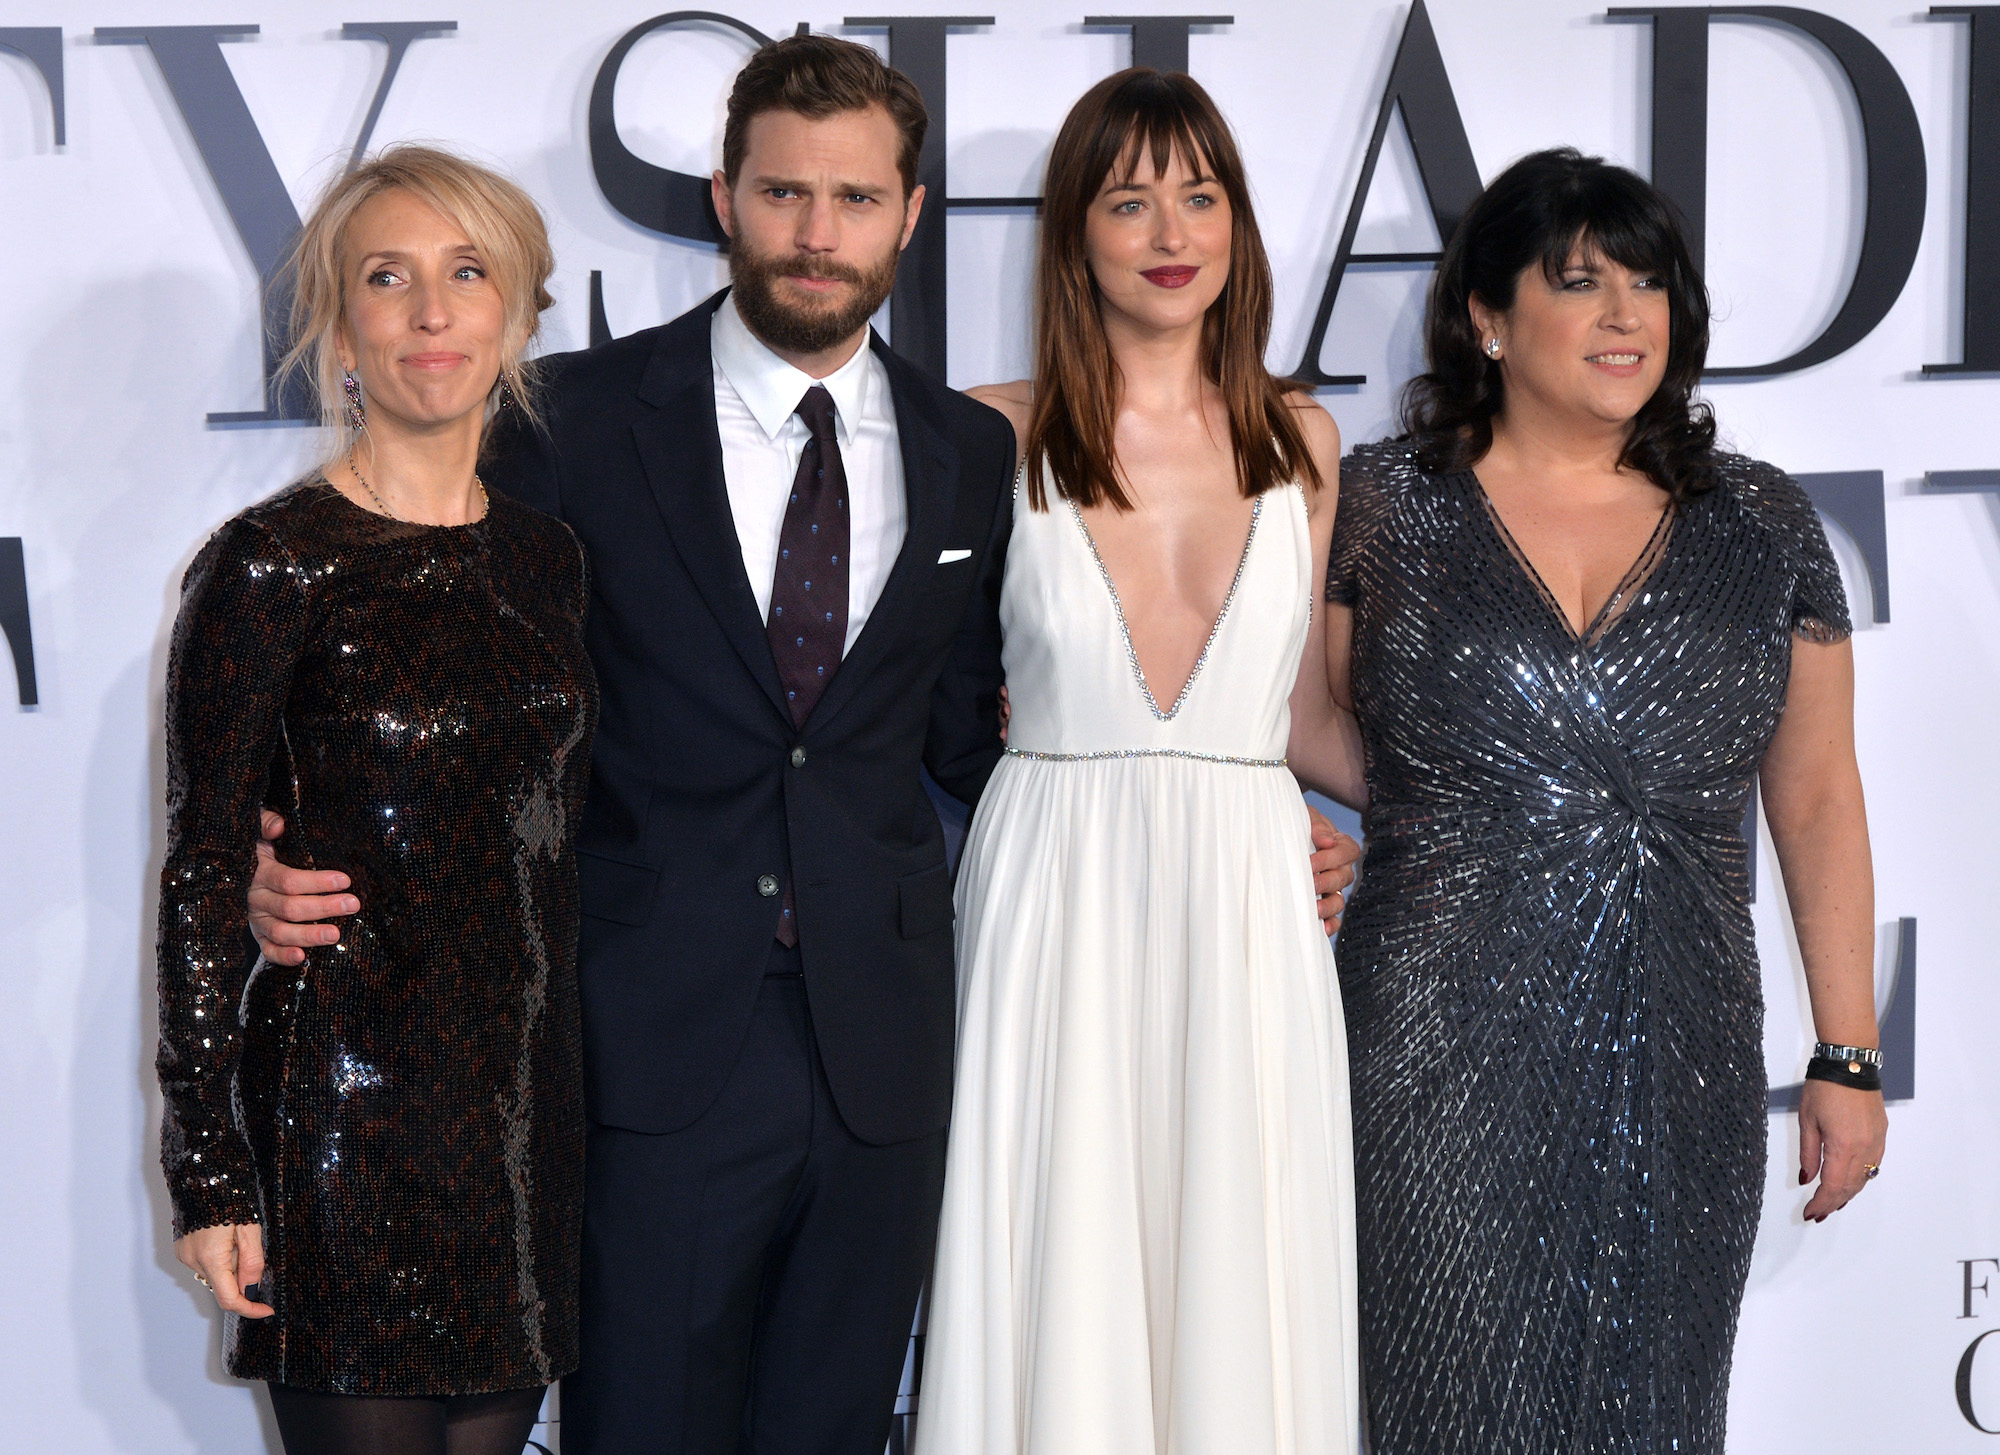 Sam Taylor-Johnson, Jamie Dornan, Dakota Johnson, and E.L. James at the UK Premiere of "Fifty Shades Of Grey" on Feb. 12, 2015